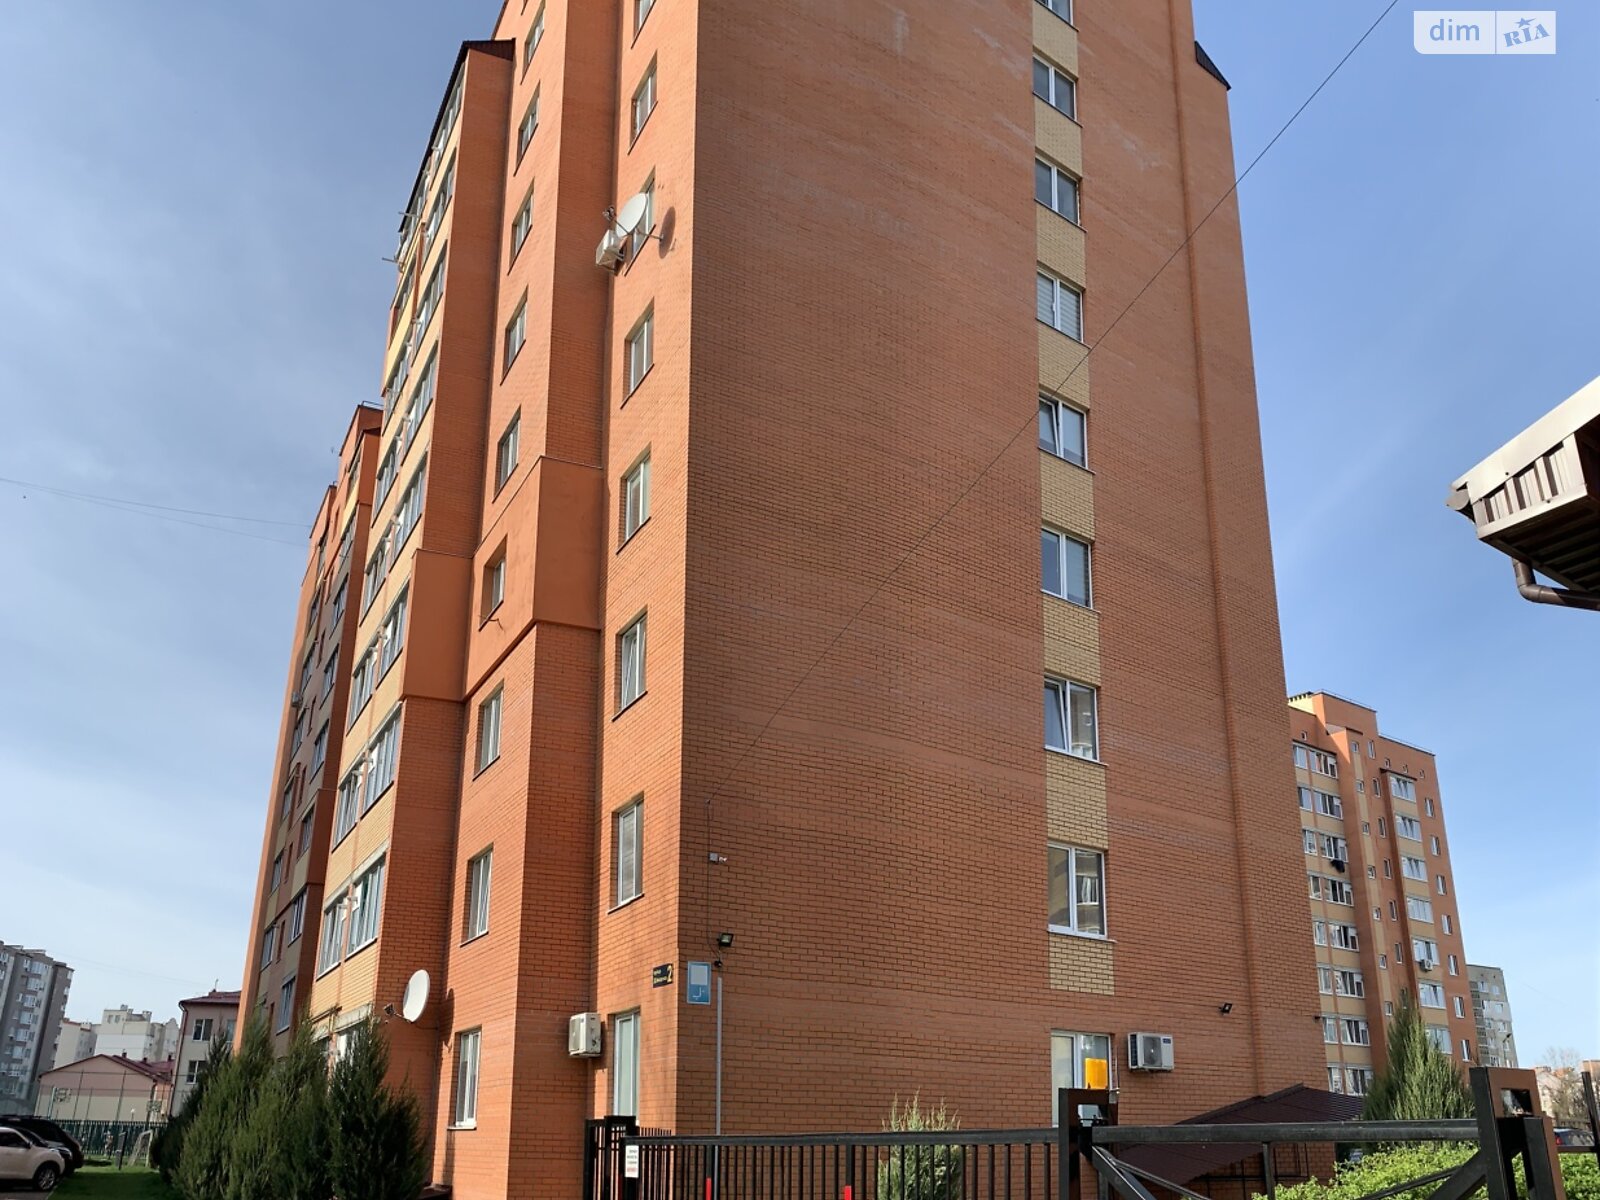 Продажа трехкомнатной квартиры в Луцке, на ул. Дмитрия Иващенко, район 55 микрорайон фото 1